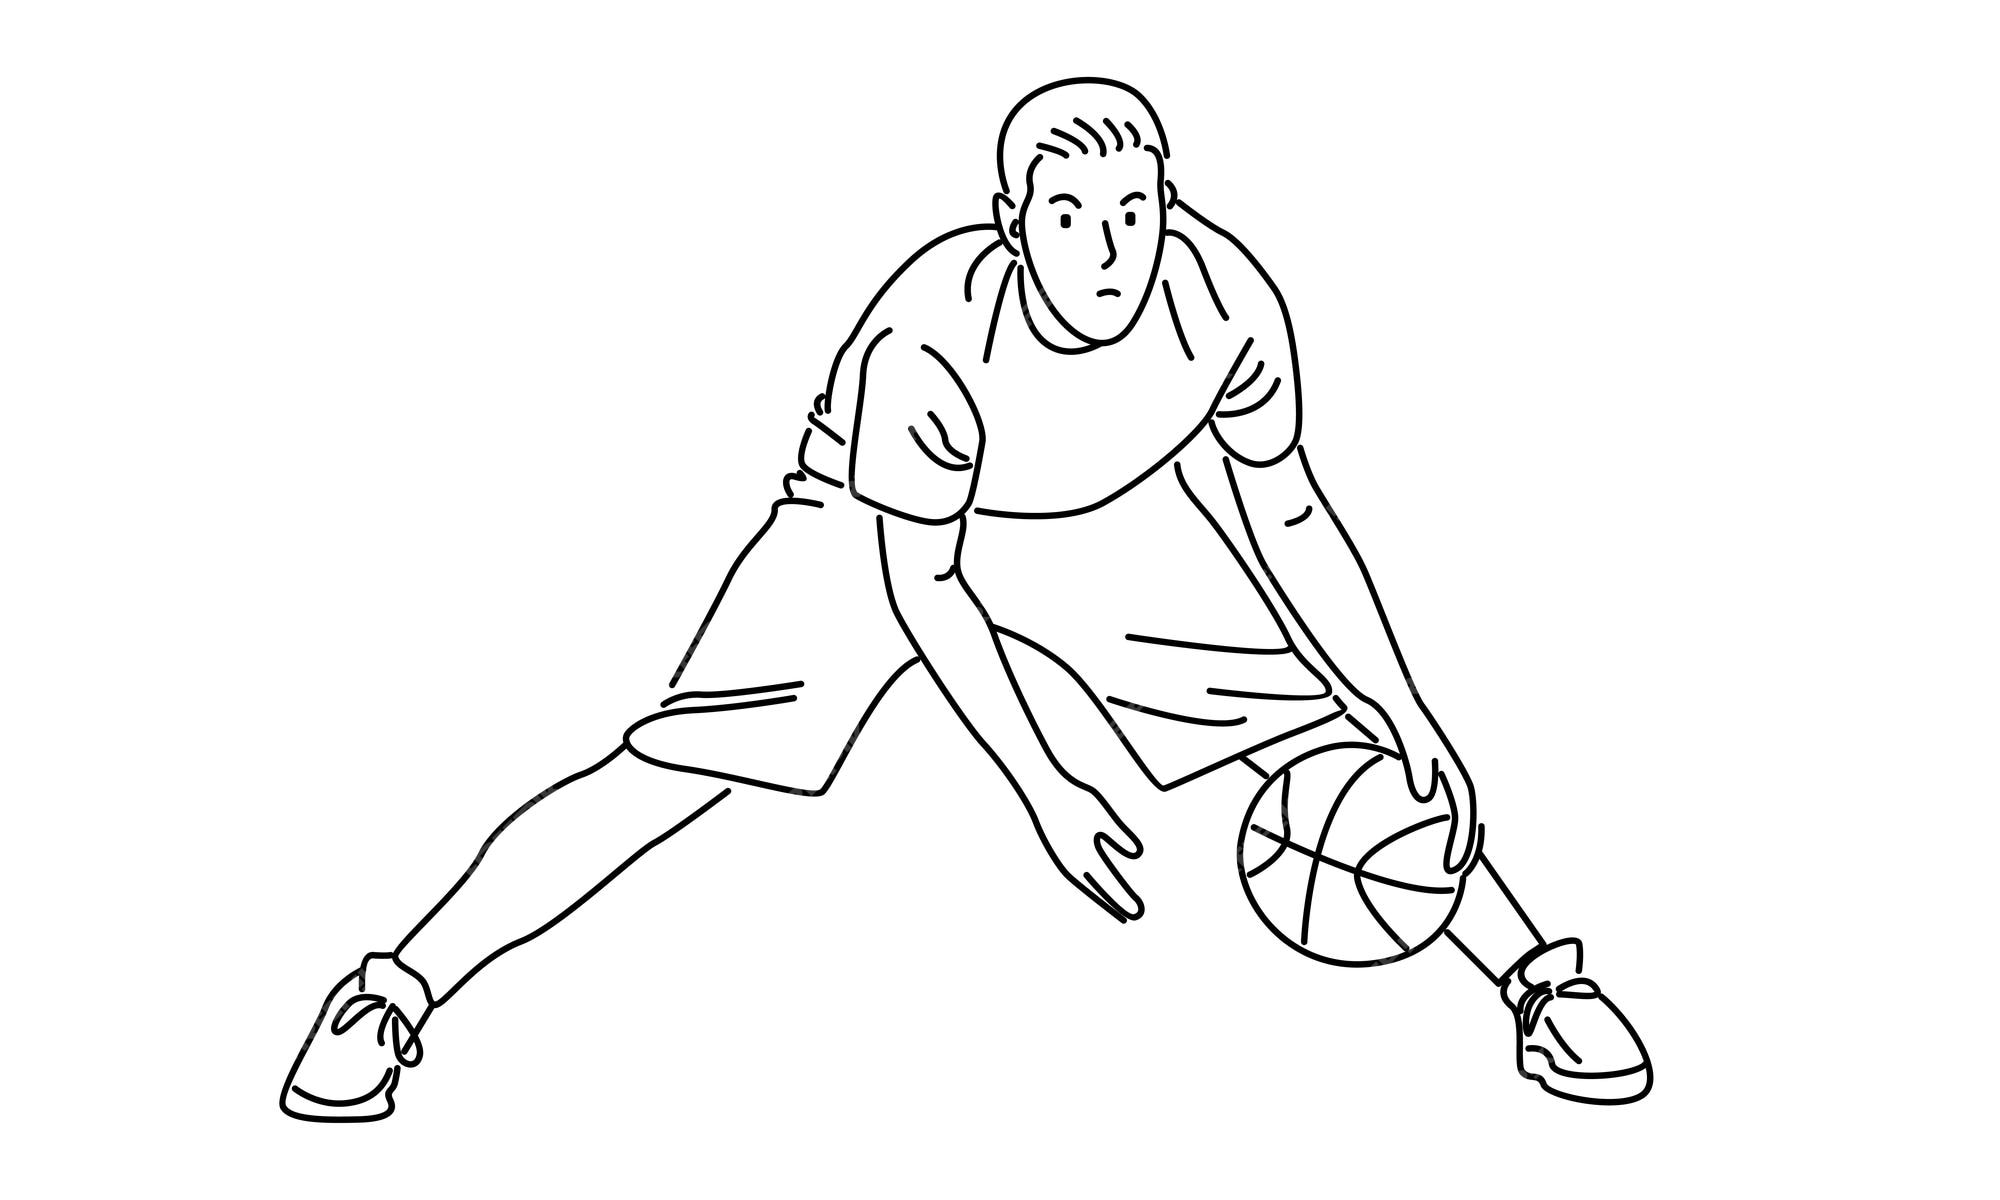 Premium Vector | Line art of basketball player dribbling the ball